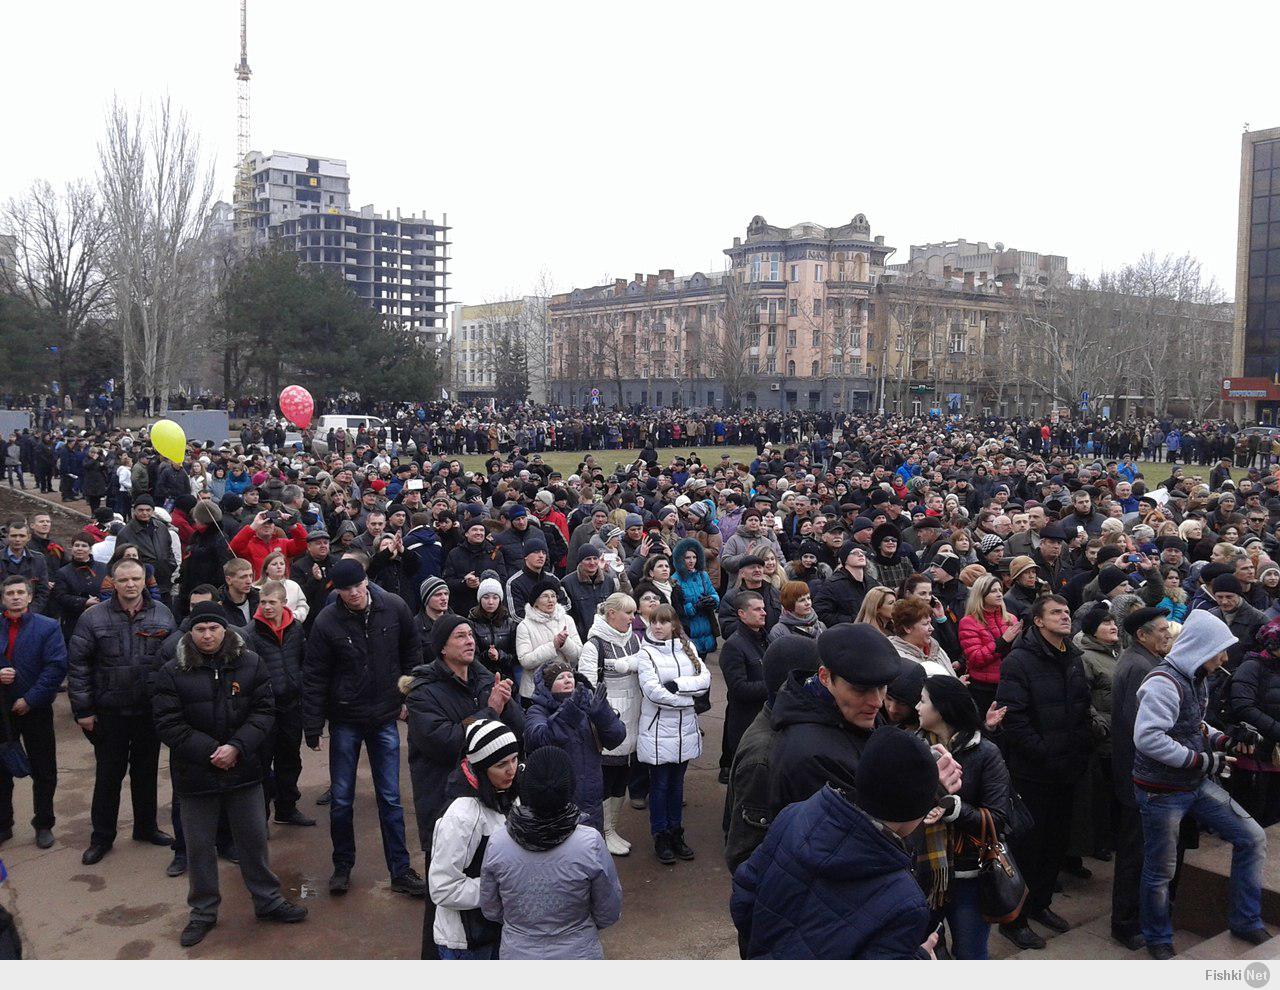 Херсон 2014 пророссийские митинги. Пророссийский митинг в Херсоне. Солянка майдана